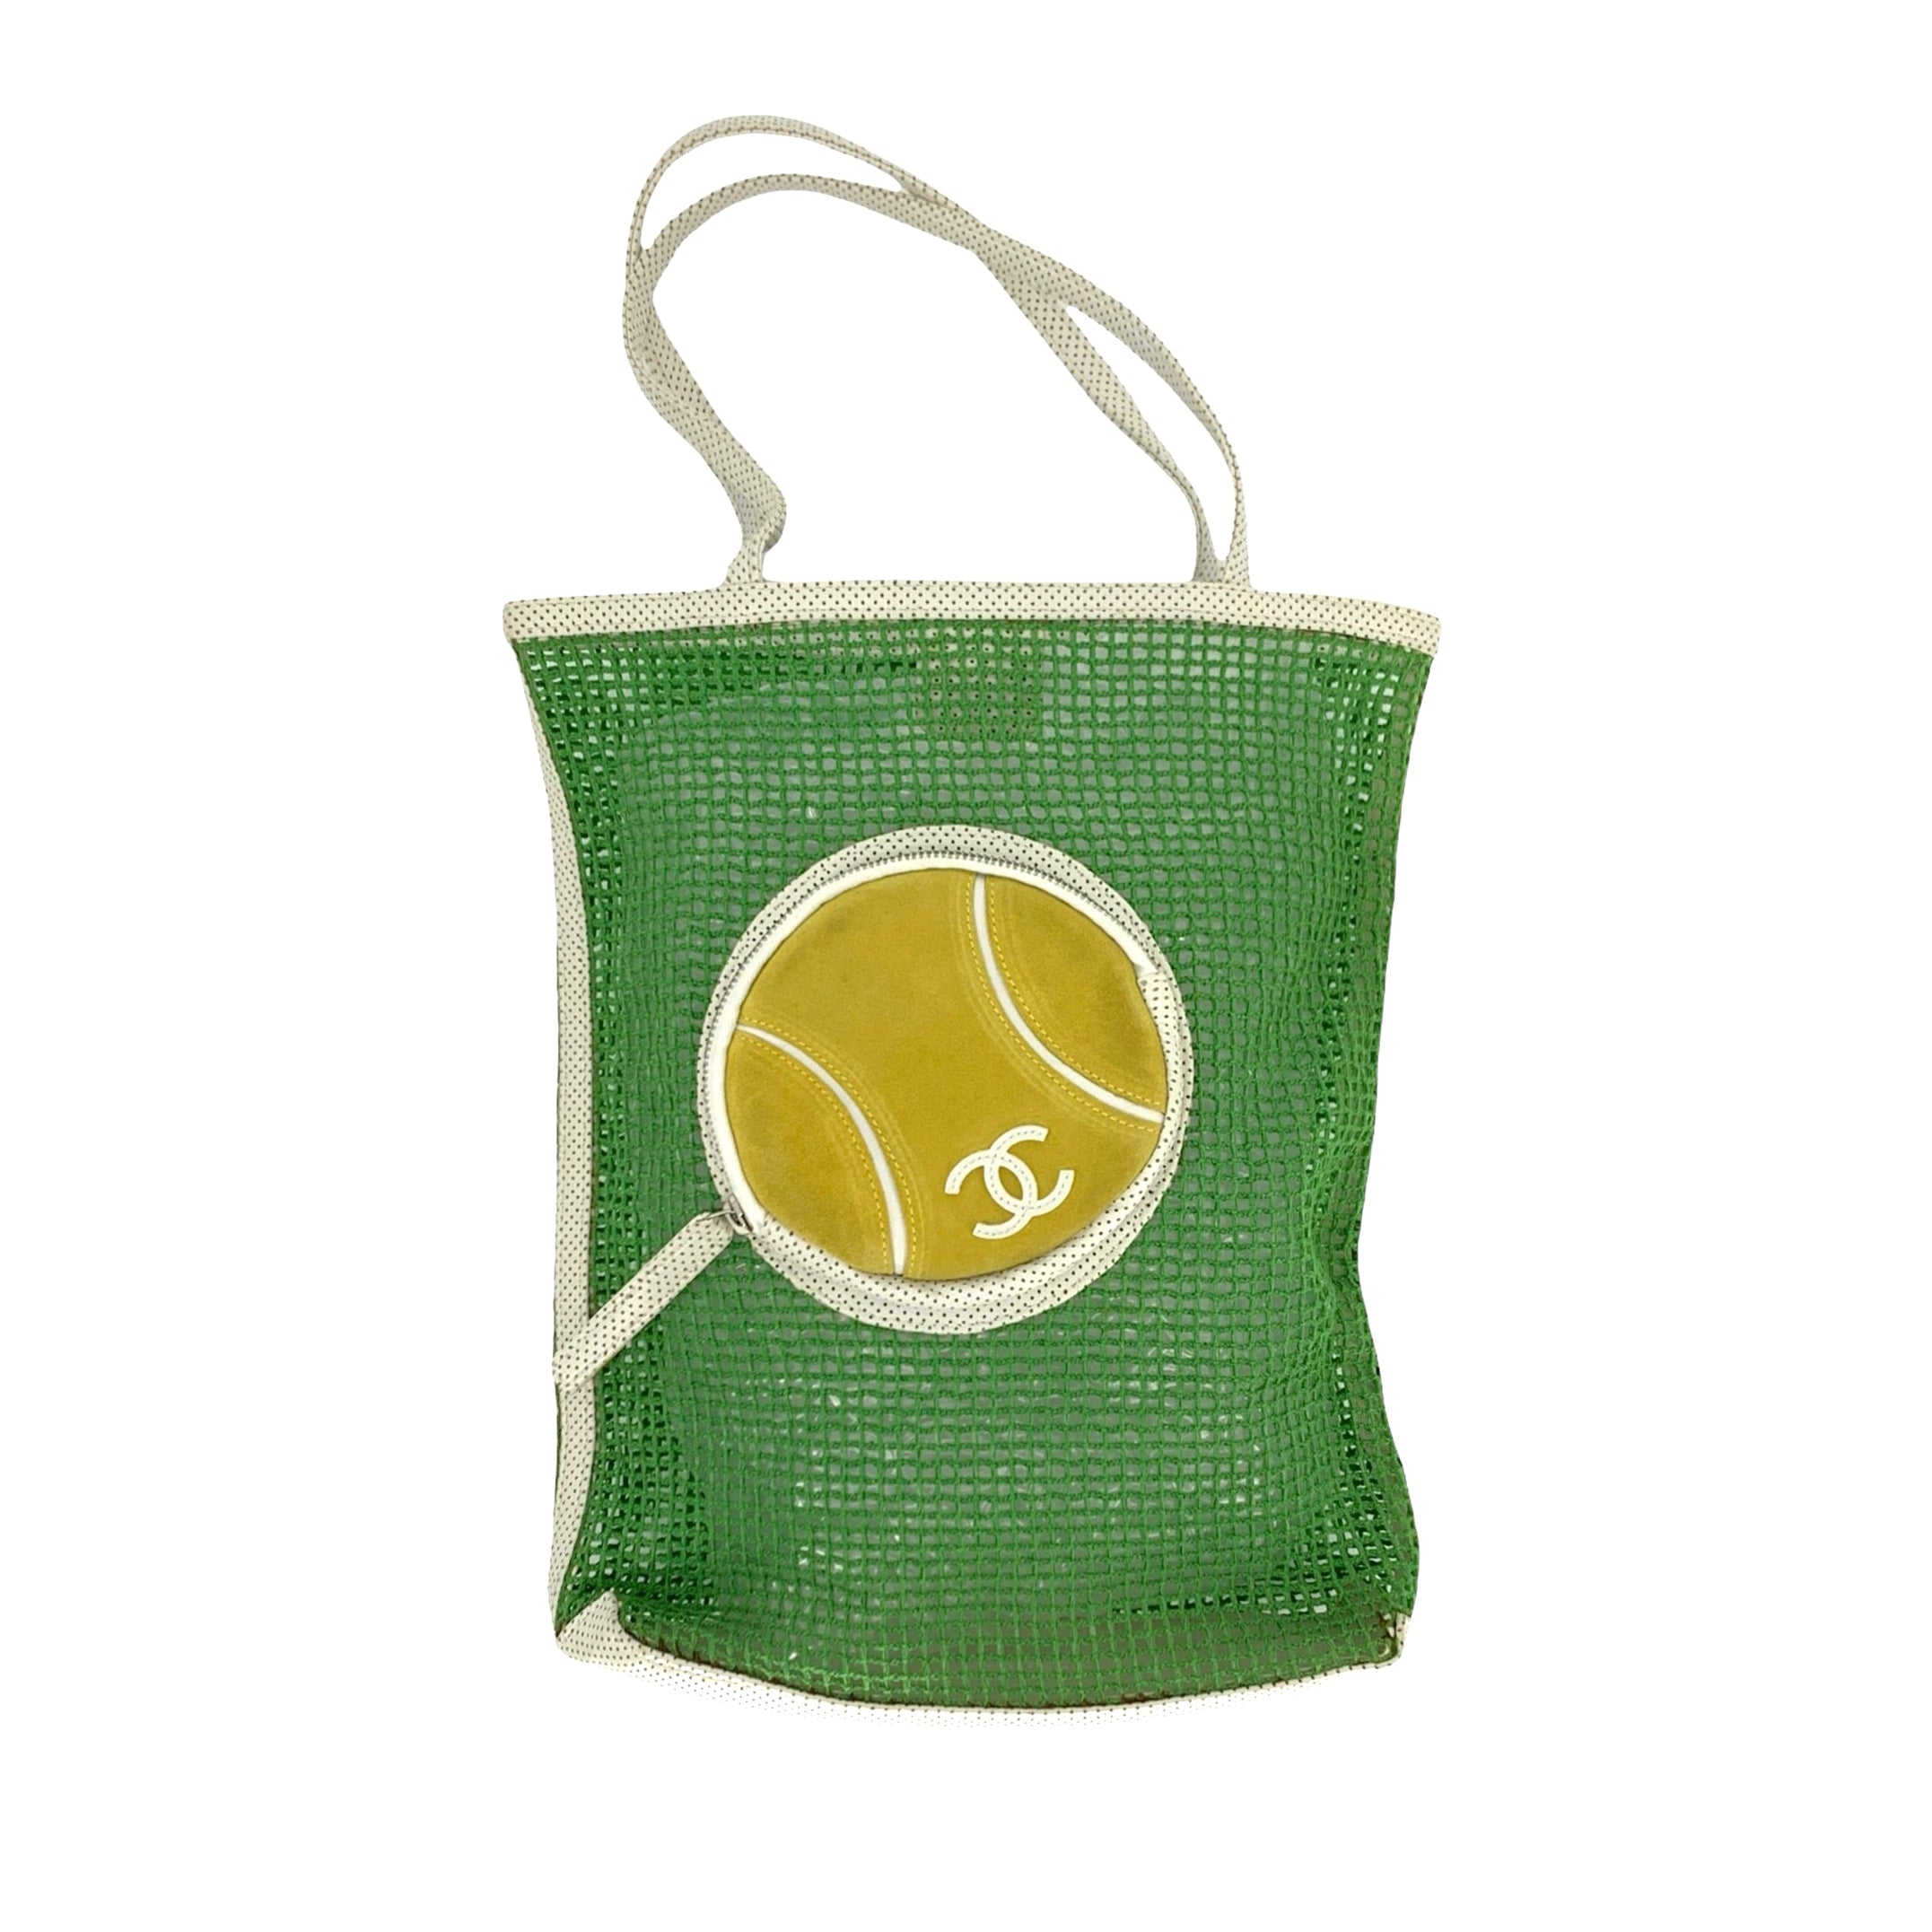 Newest Limited Edition Chanel Tennis Bag 🎾🤍#stevemaddenbag#viralbag#